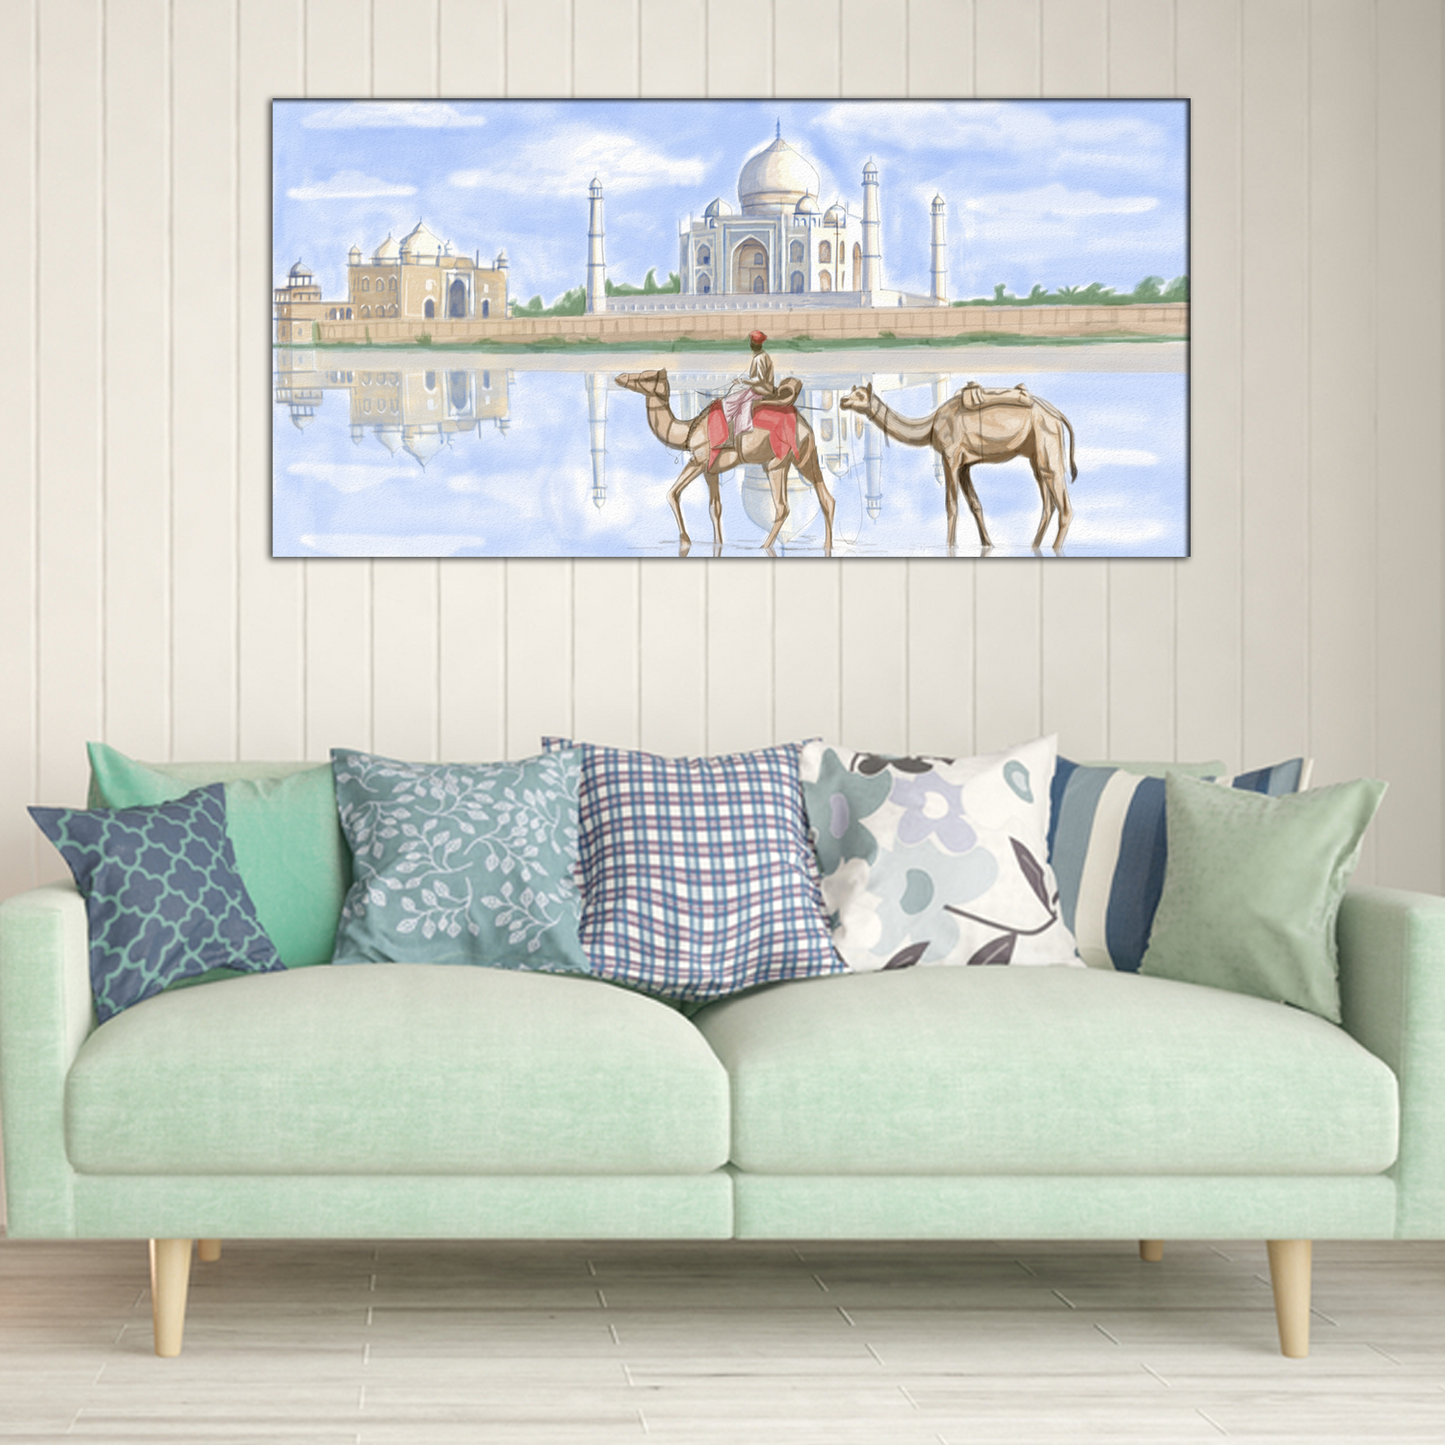 Taj Mahal With Camel Monuments Canvas Print Wall Painting